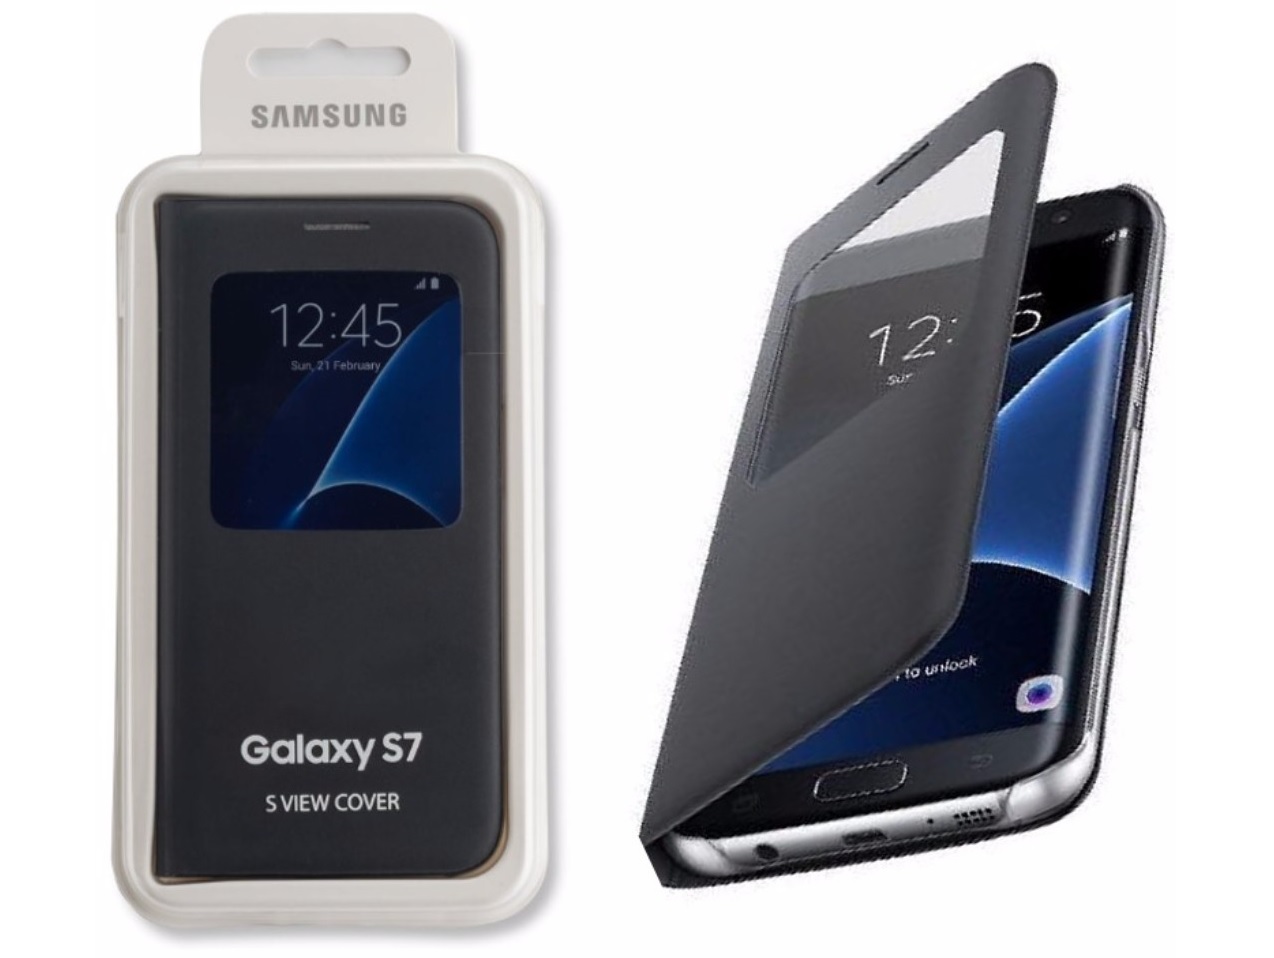 Samsung Galaxy S7 flip cover protective EF-CG930PBEGWW